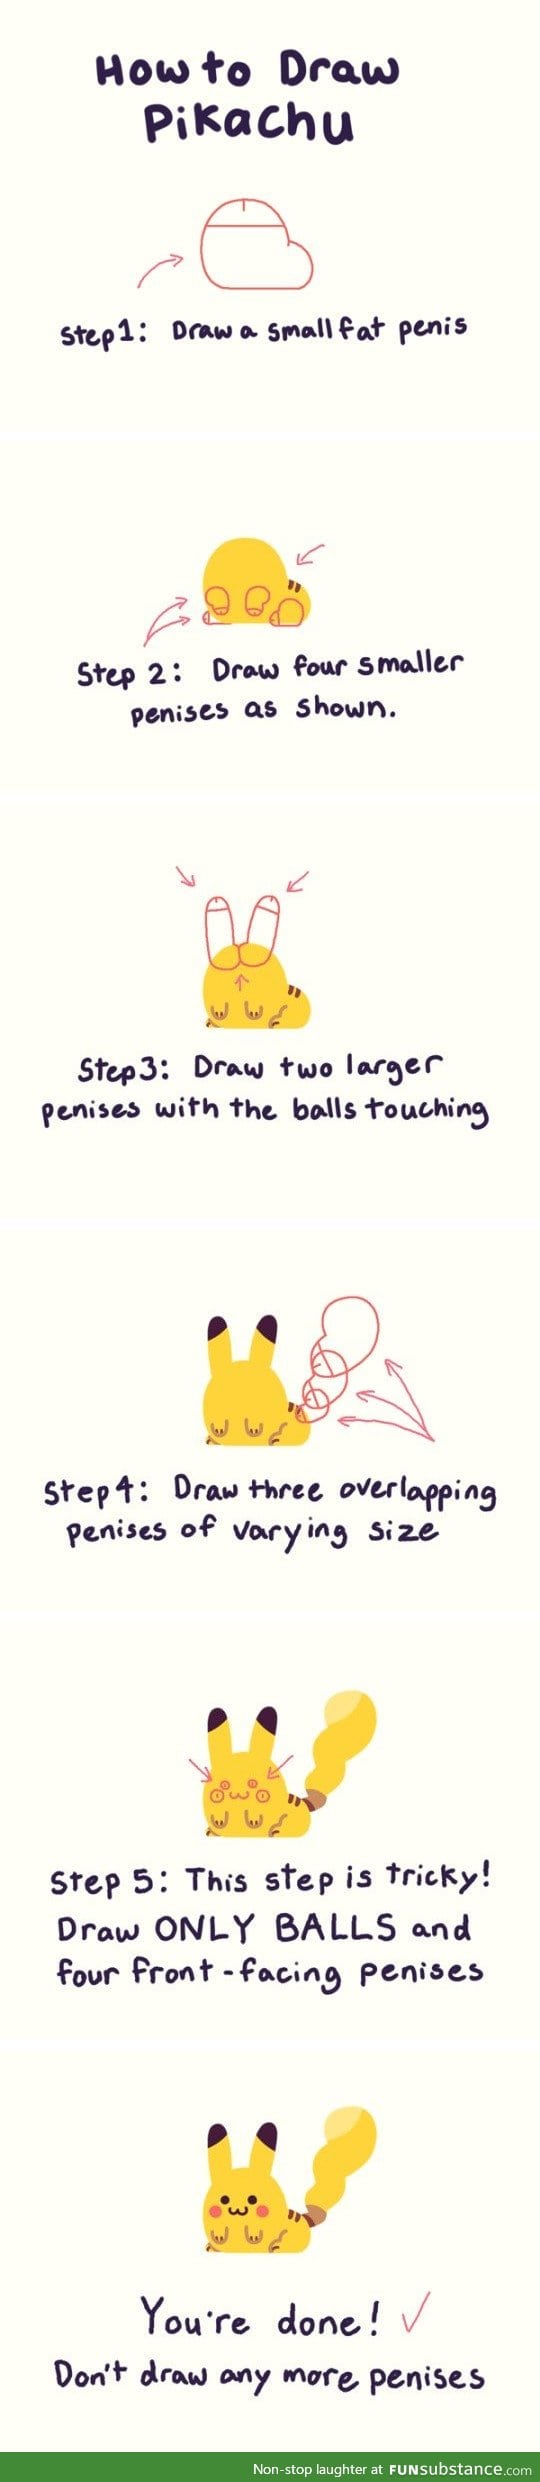 How to draw Pikachu - FunSubstance